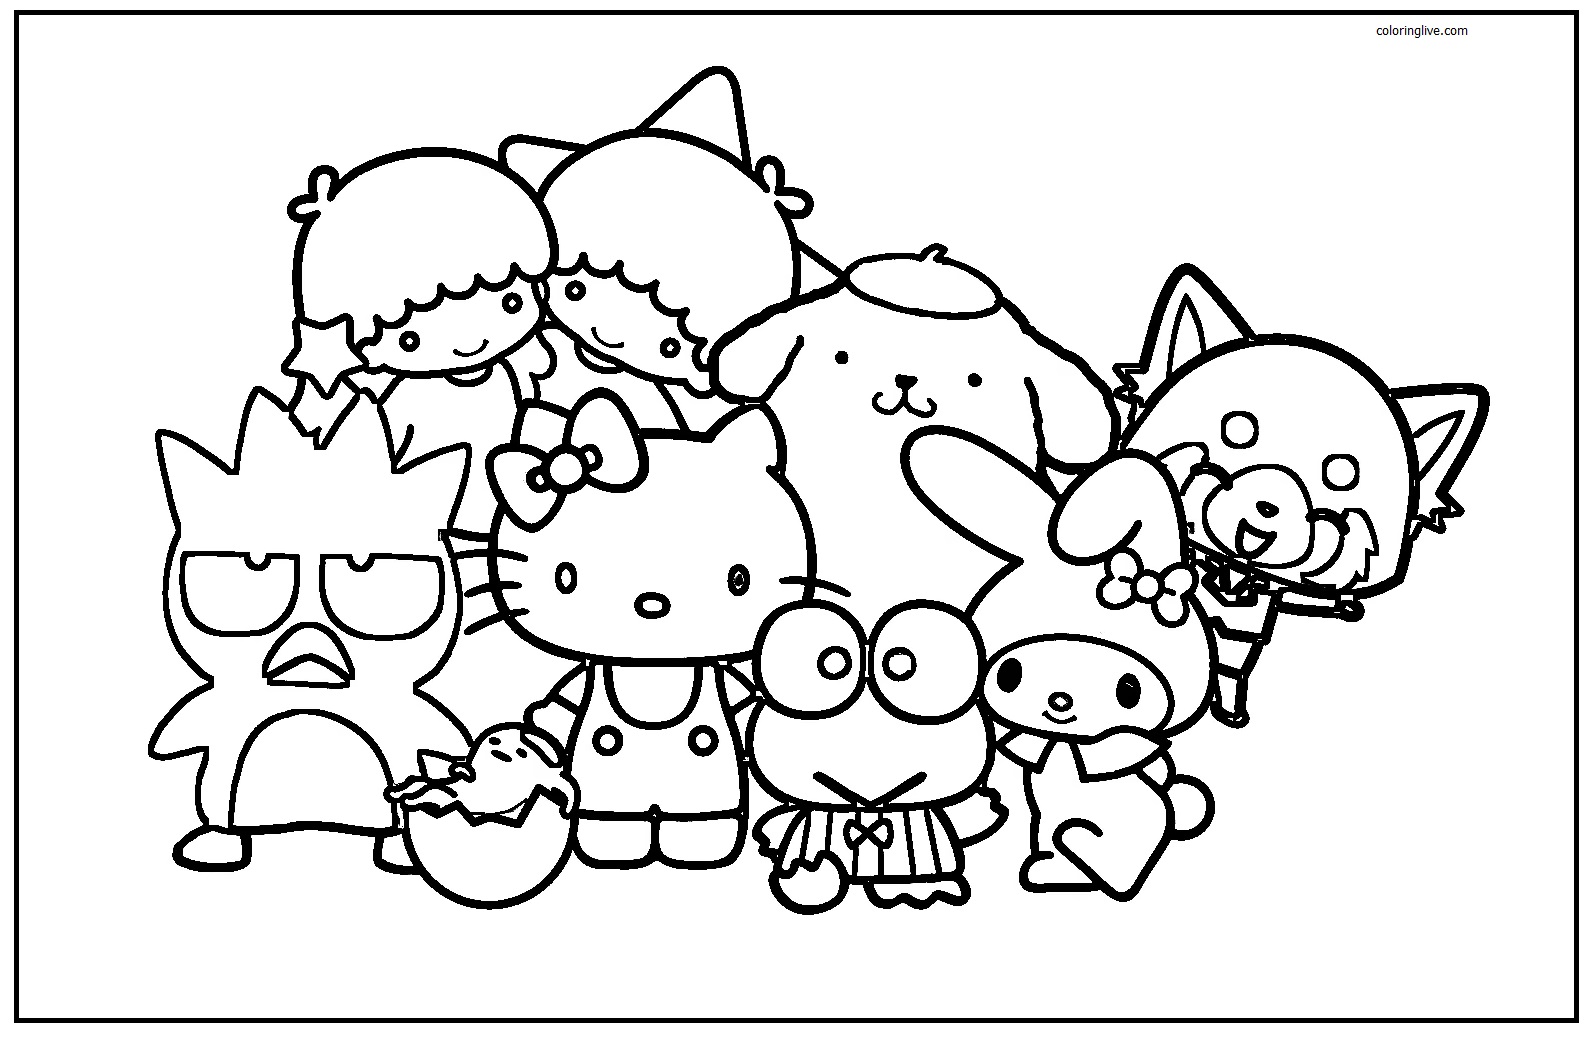 Printable Sanrio   6 Coloring Page for kids.